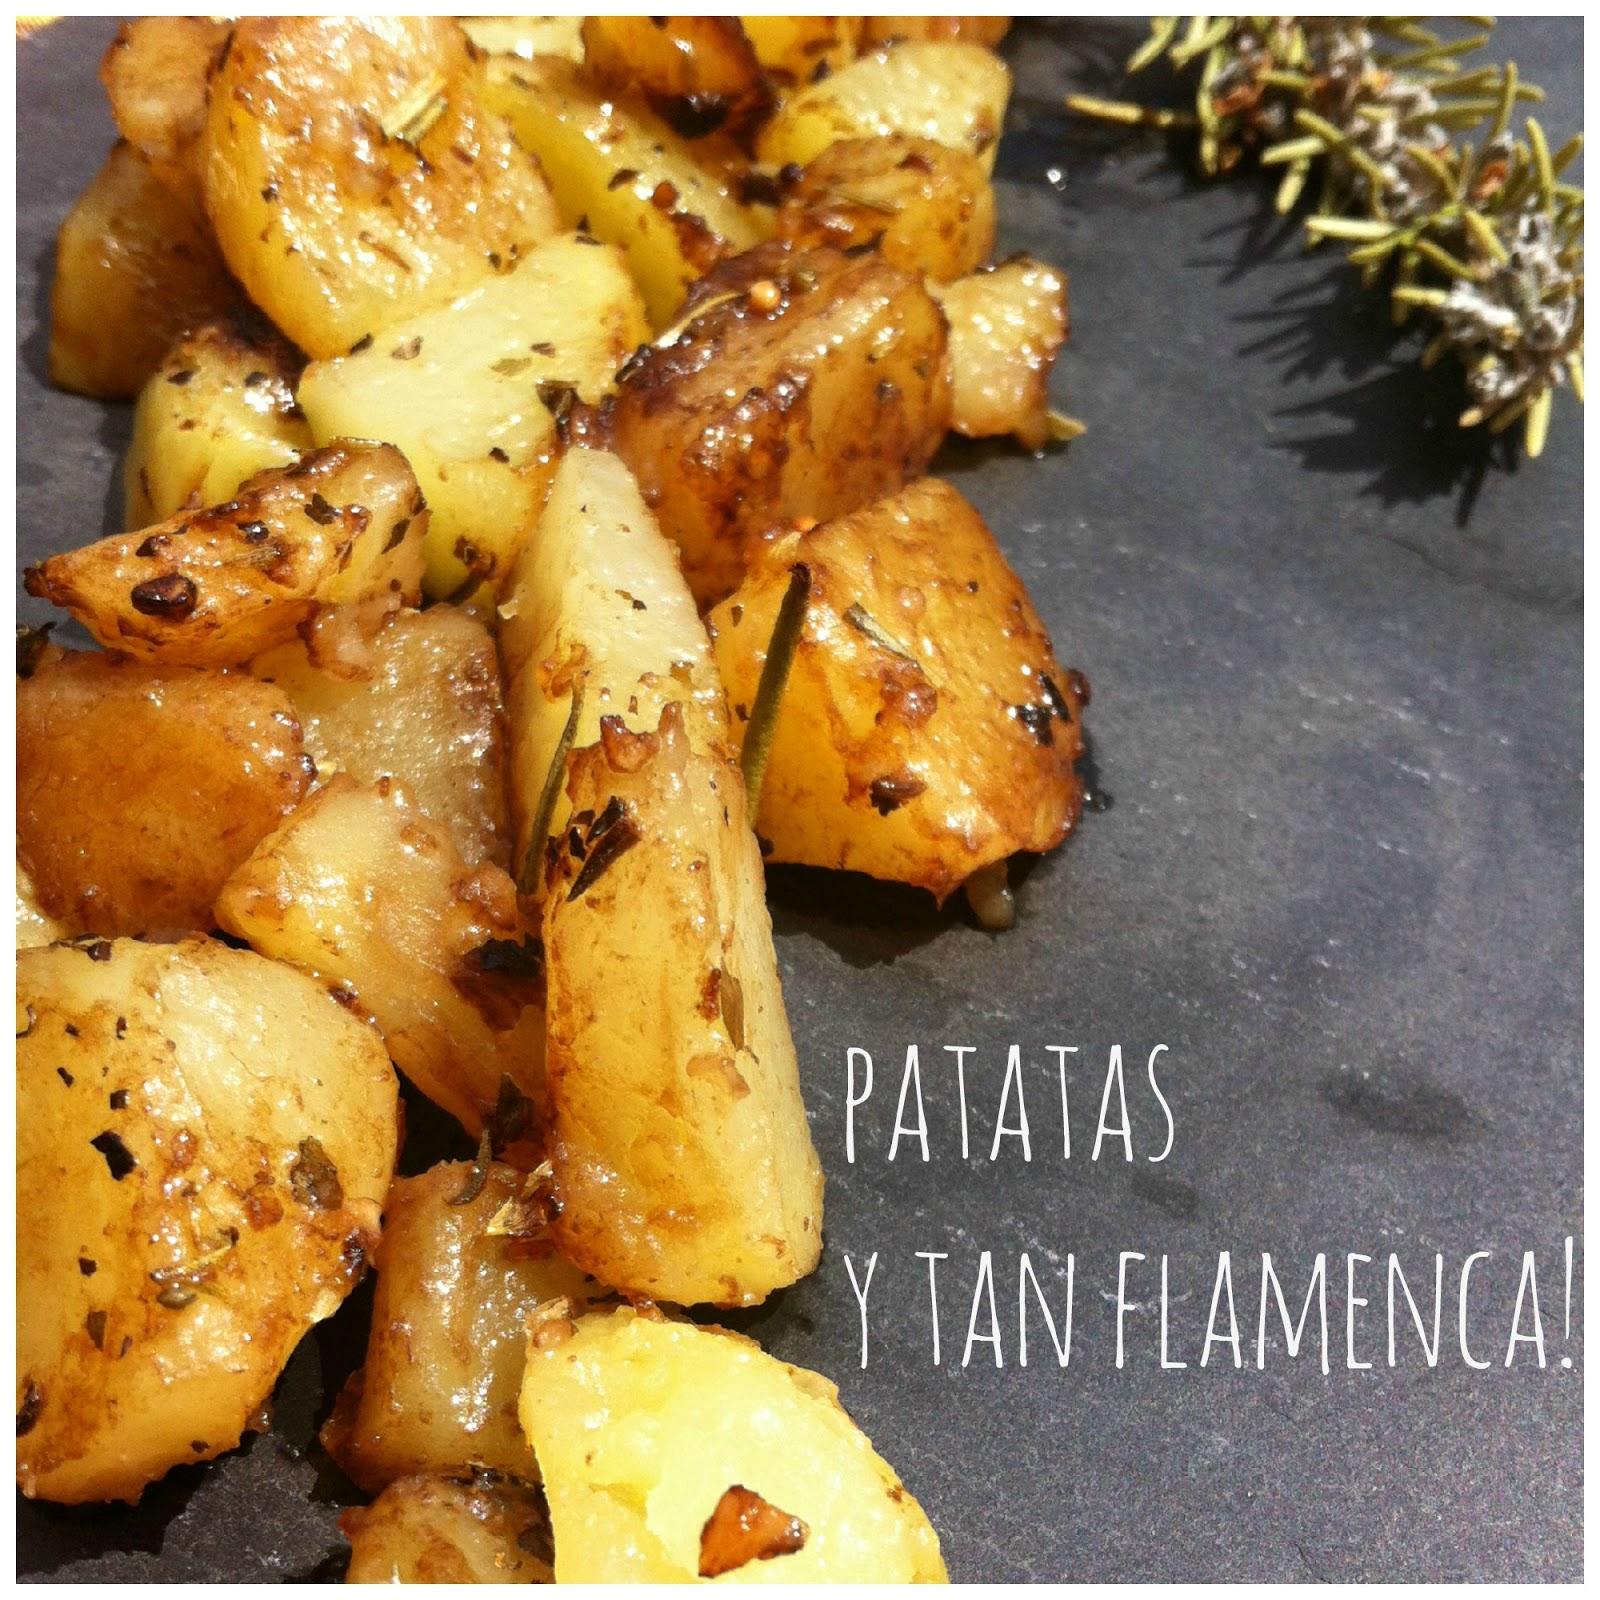 Receta: patatas Y tan flamenca! - Recipe: baked potatoes by Y tan flamenca!